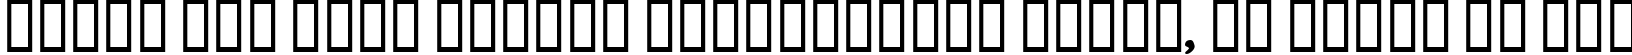 Пример написания шрифтом AddJazz текста на русском